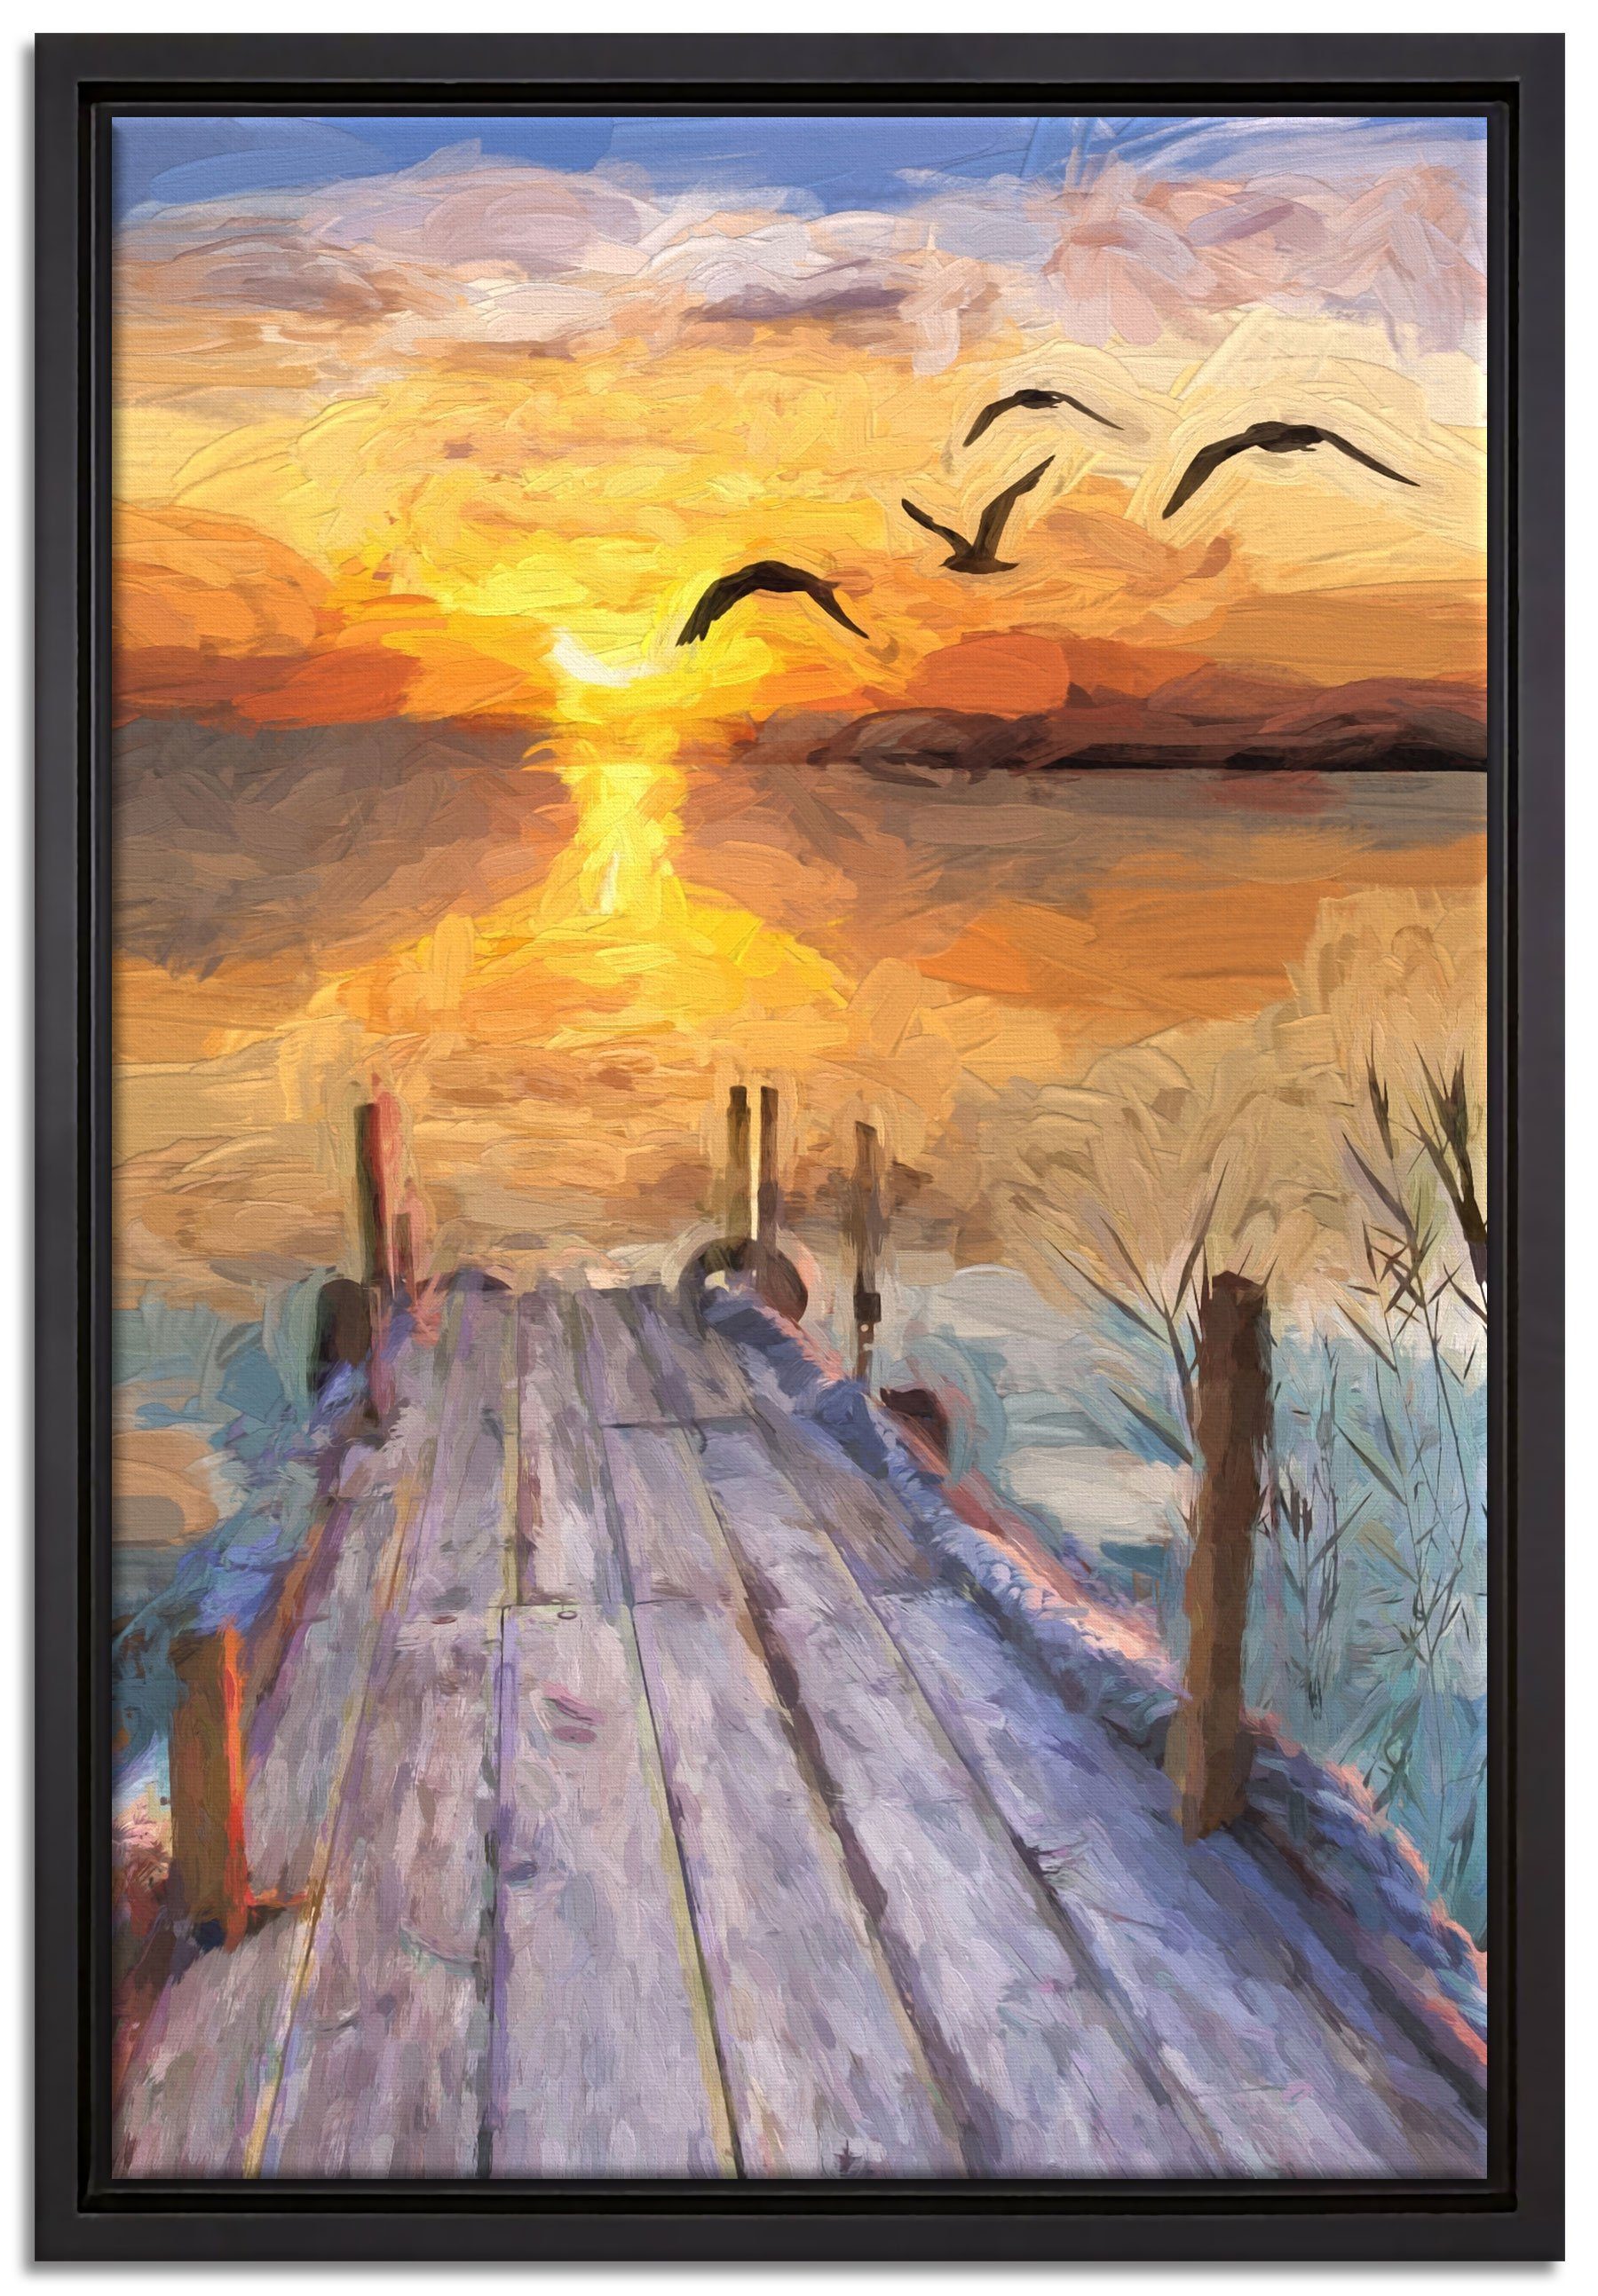 Pixxprint Leinwandbild Steg im Meer, Wanddekoration (1 St), Leinwandbild fertig bespannt, in einem Schattenfugen-Bilderrahmen gefasst, inkl. Zackenaufhänger